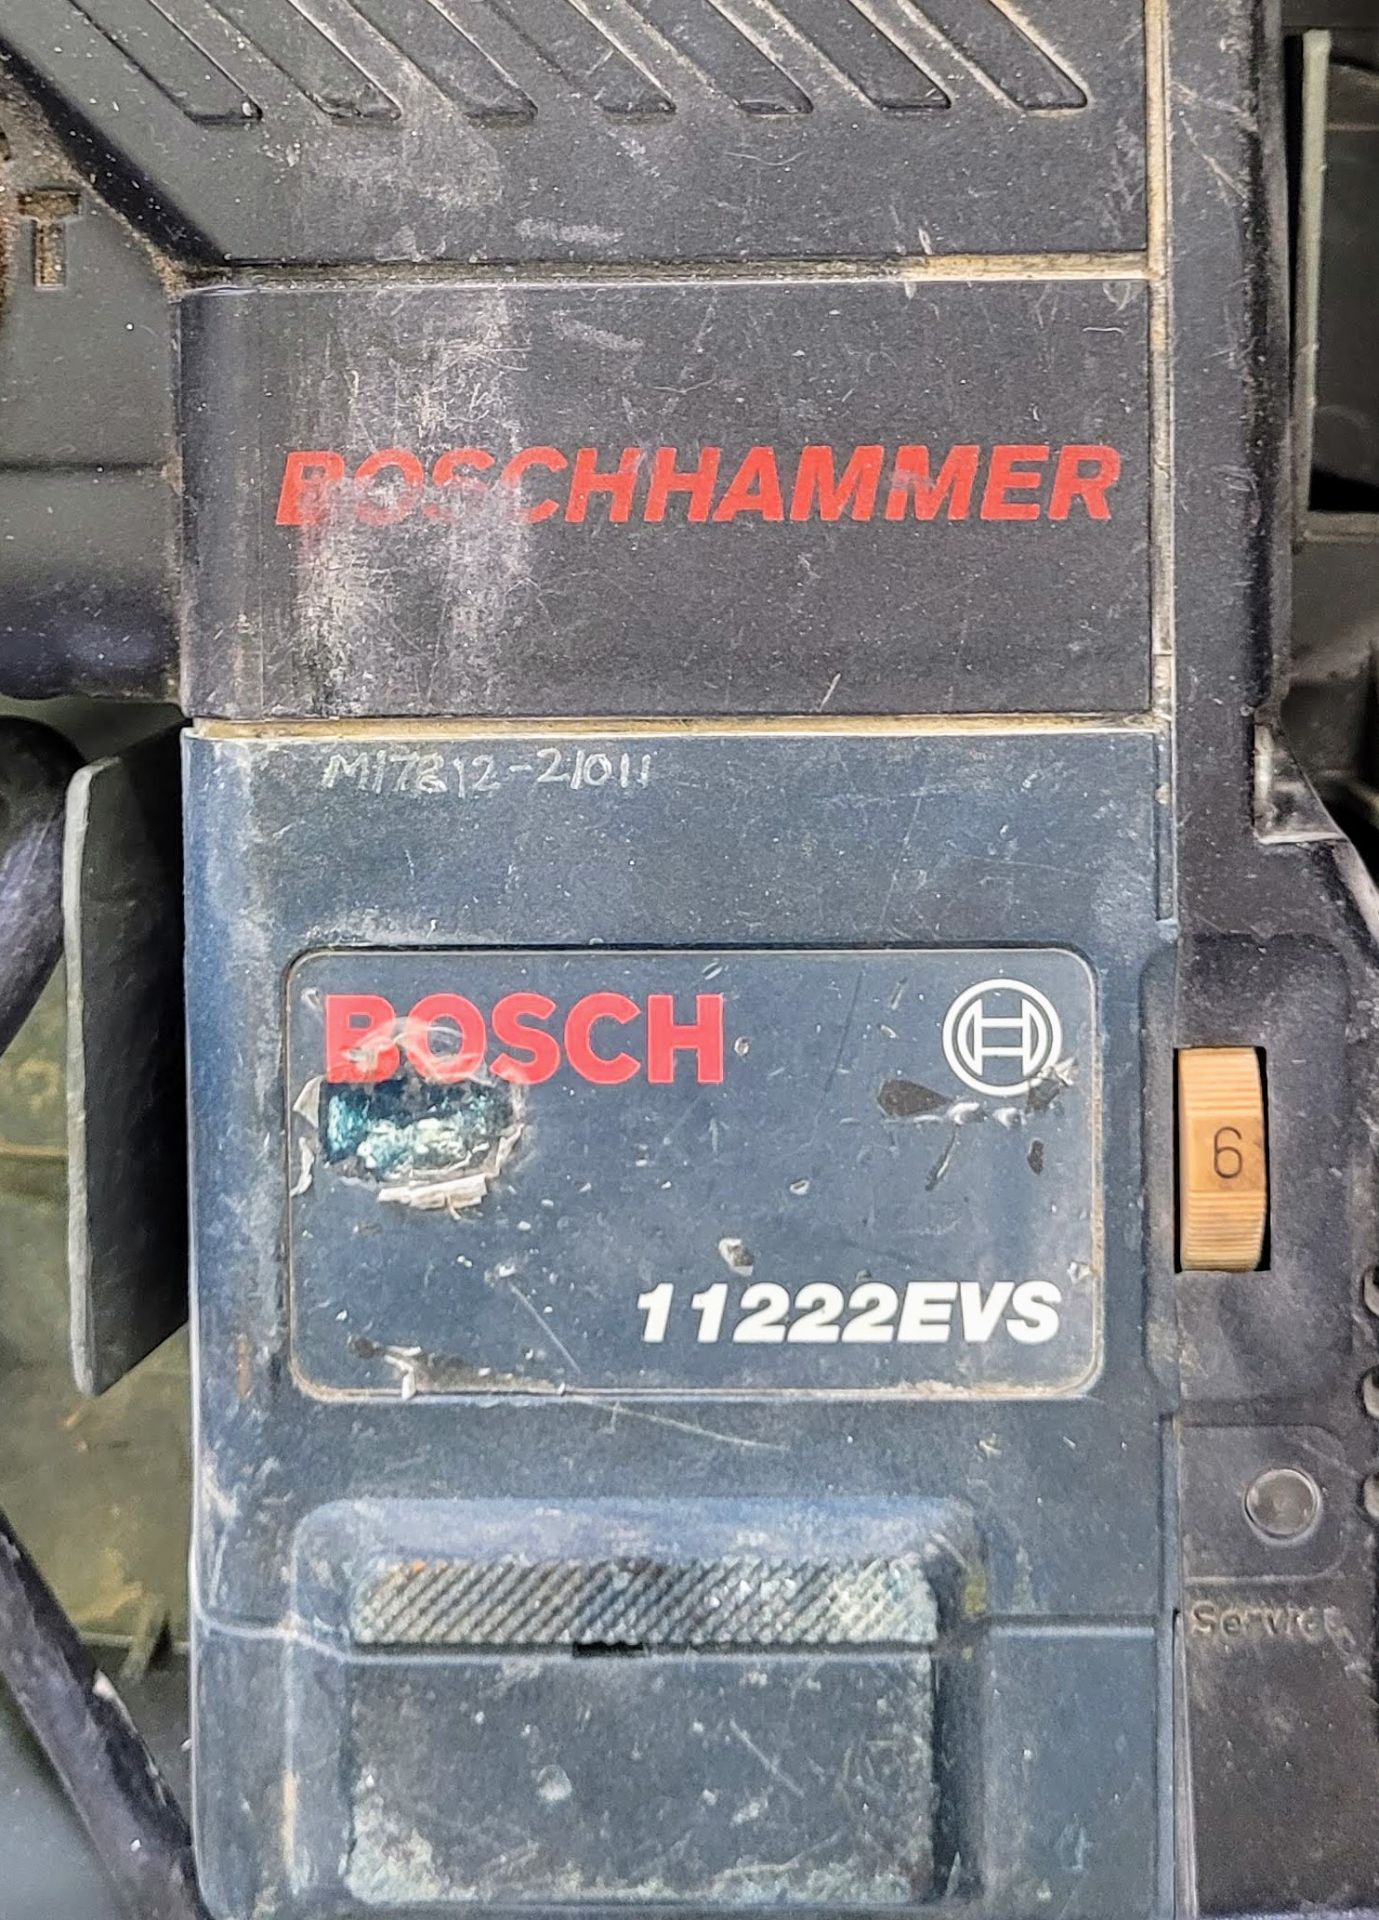 BOSCH 11222EVS COMBINATION HAMMER - Image 2 of 2